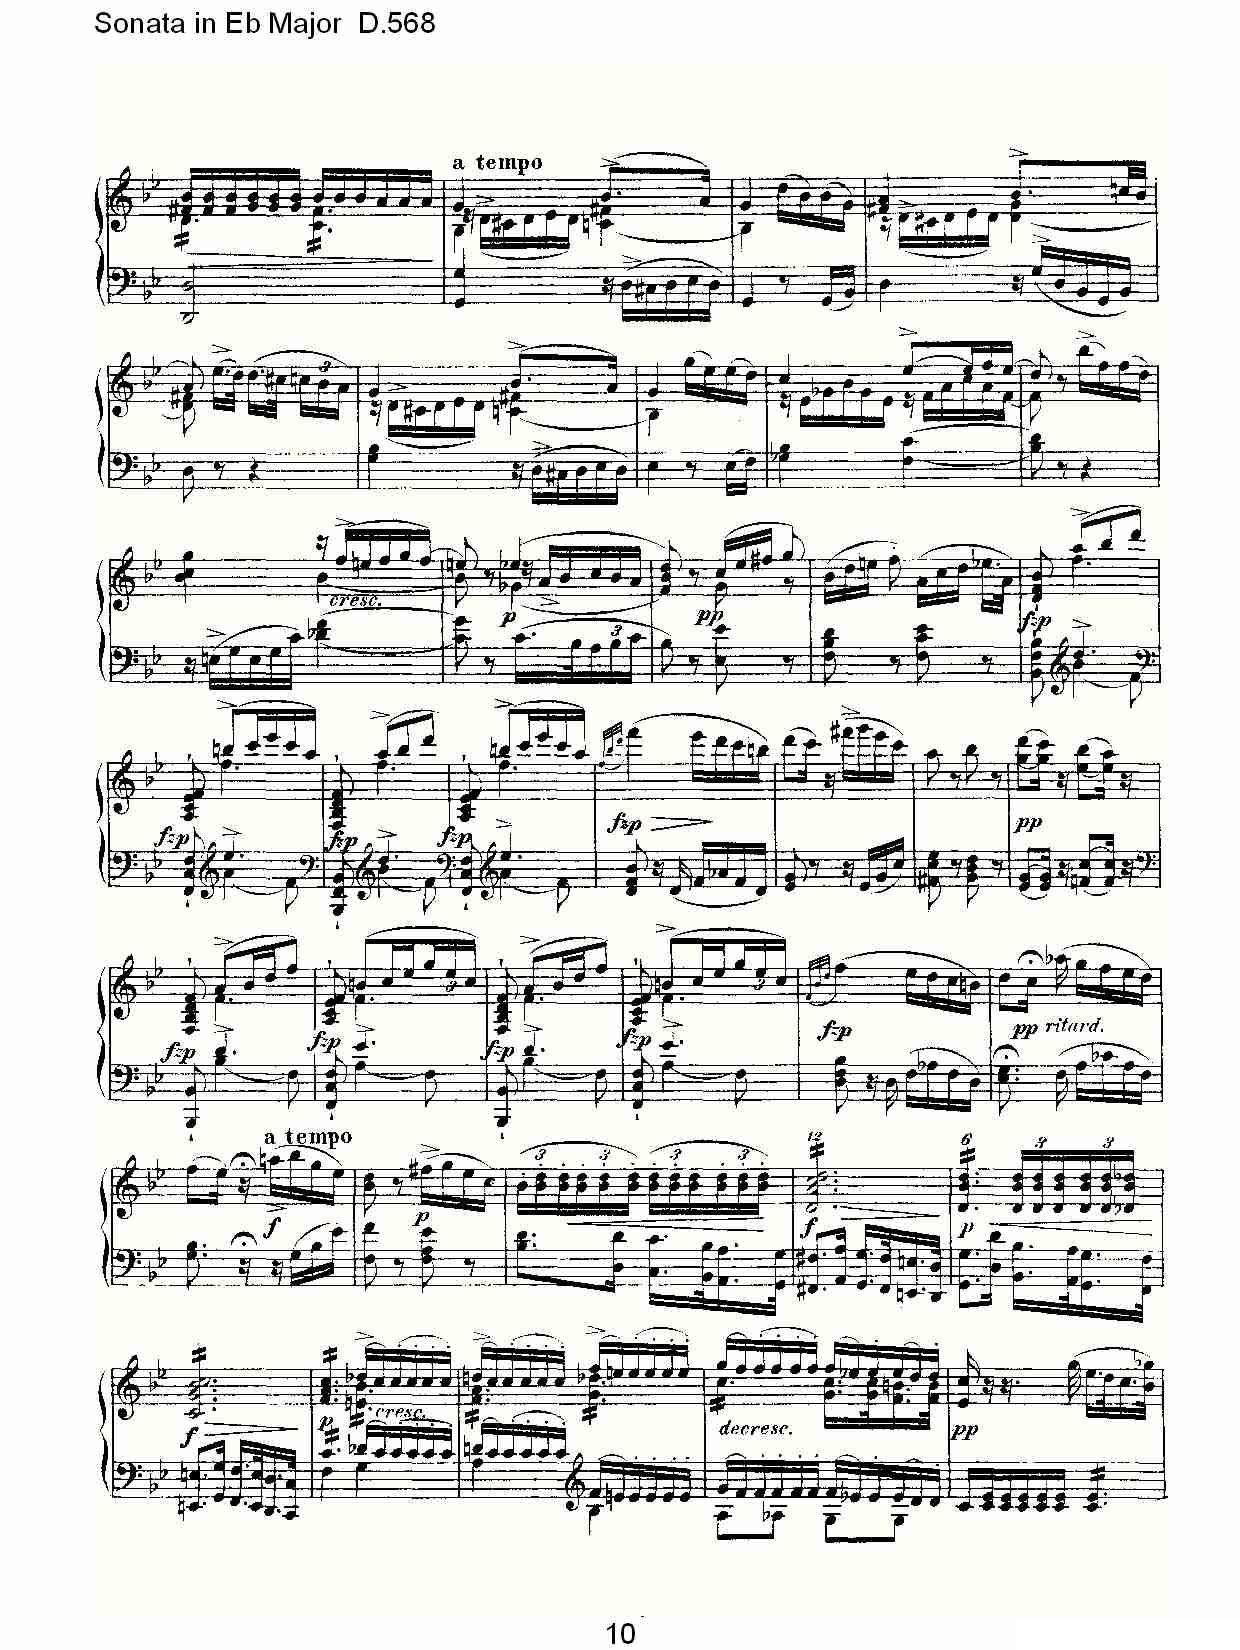 Sonata in Eb Major D.568（Eb大调奏鸣曲 D.568）钢琴曲谱（图10）